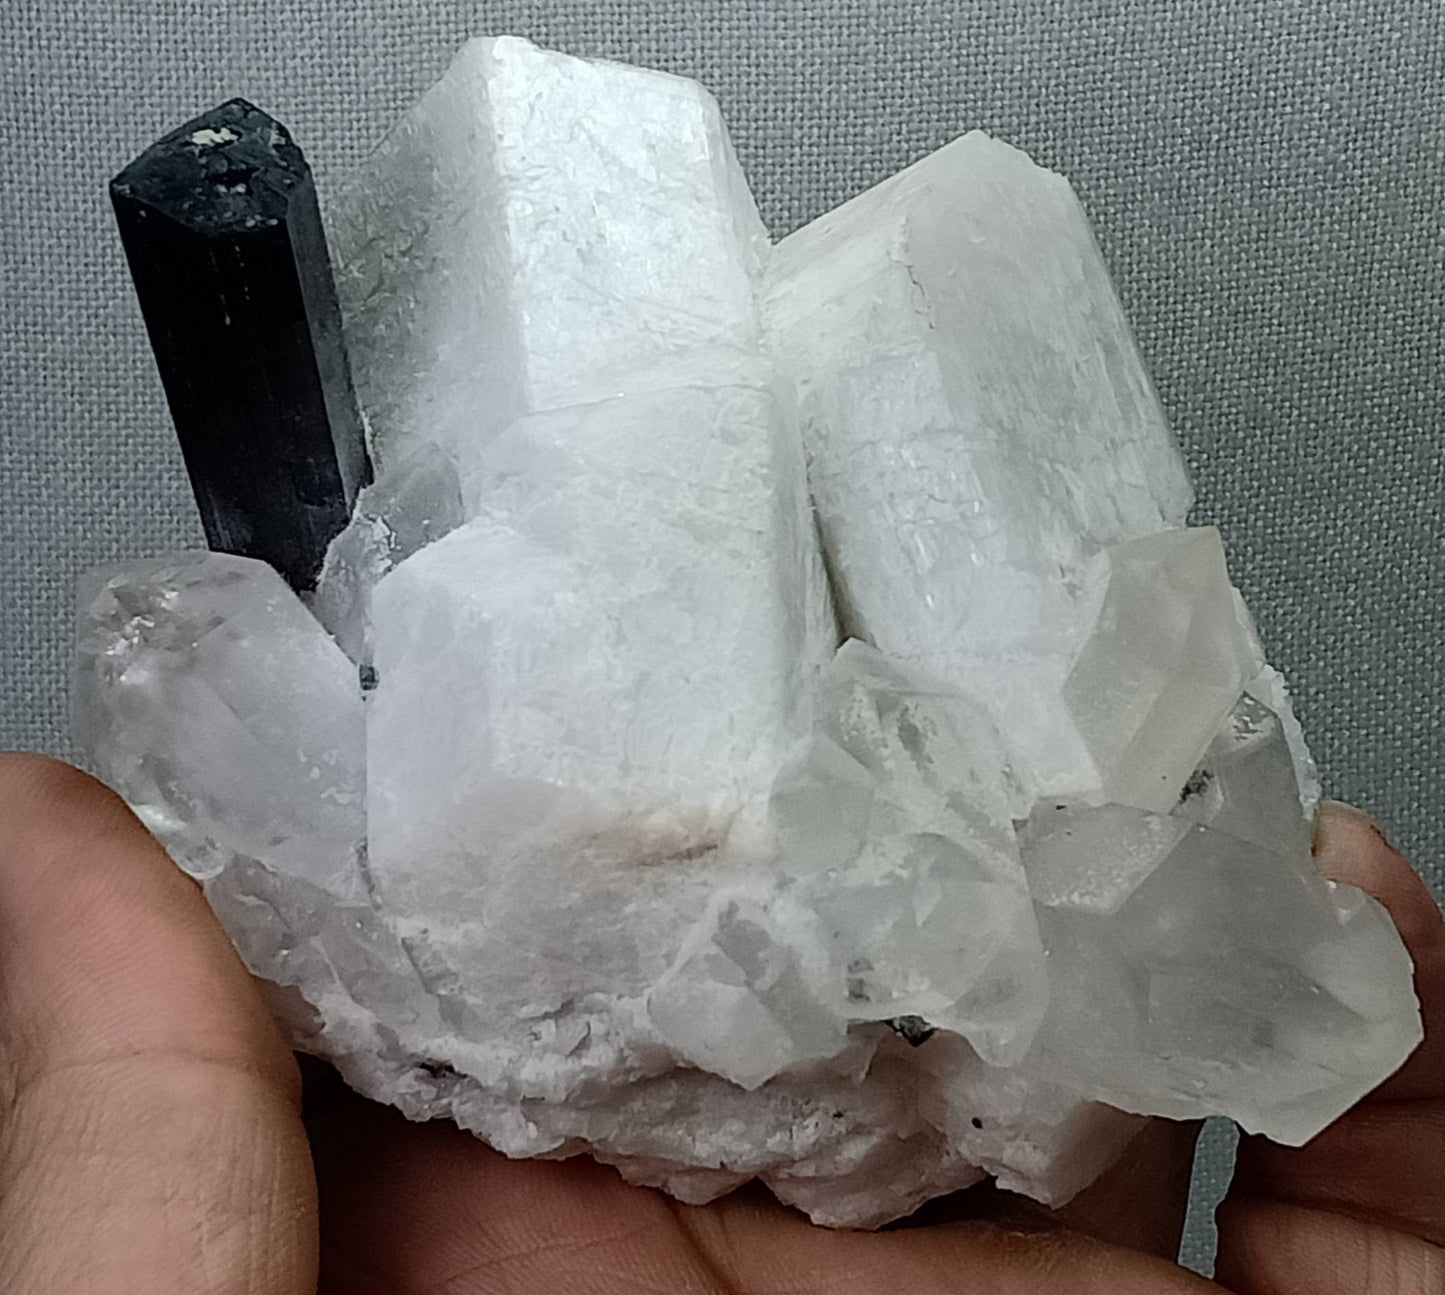 Blue cap Tourmaline joined with Feldspar and quartz crystals 403 grams